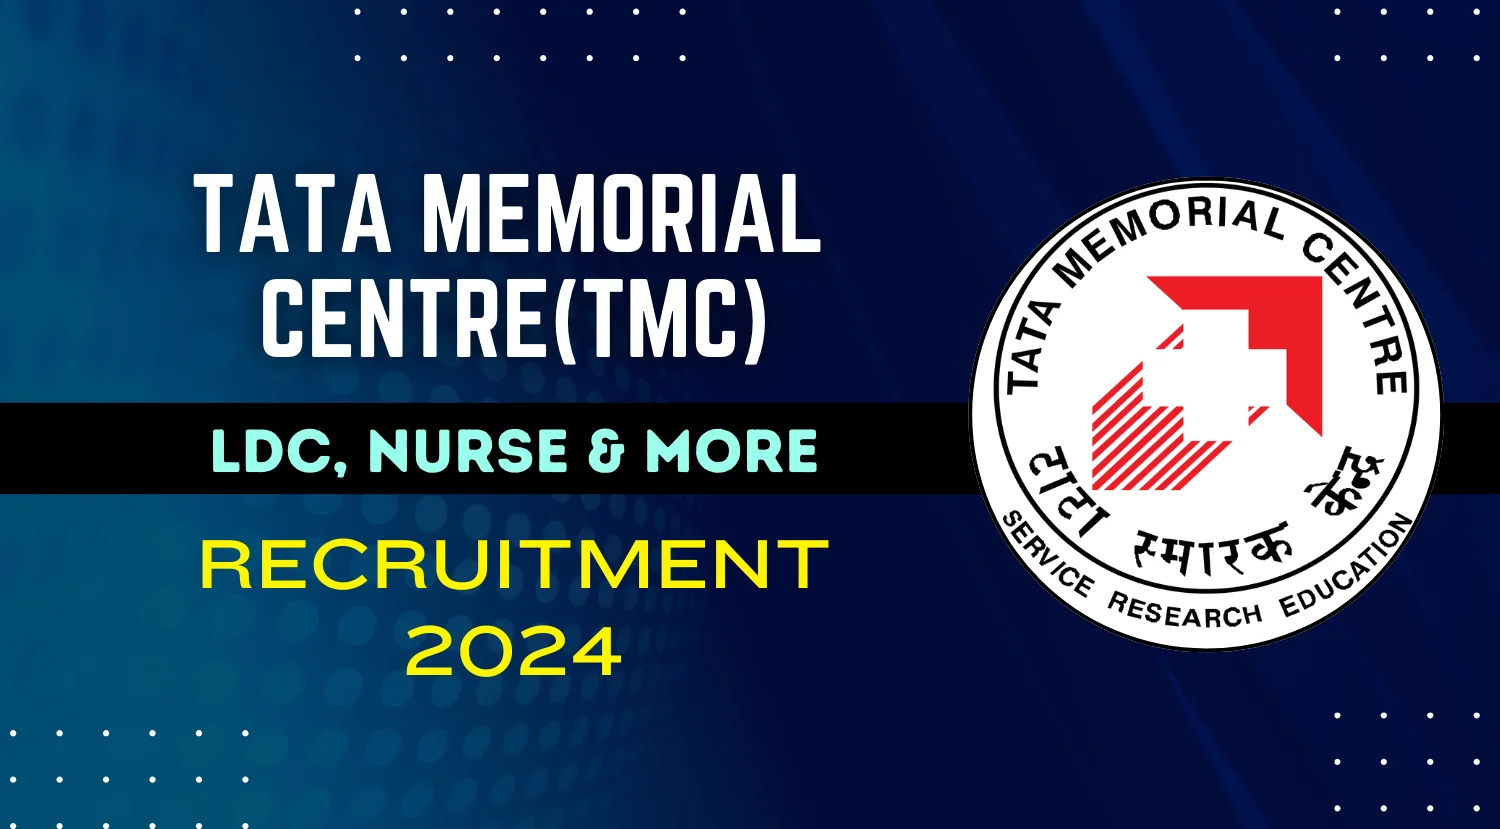 Tata Memorial Centre (TMC) Recruitment 2024 For LDC, Nurse and More Vacancies